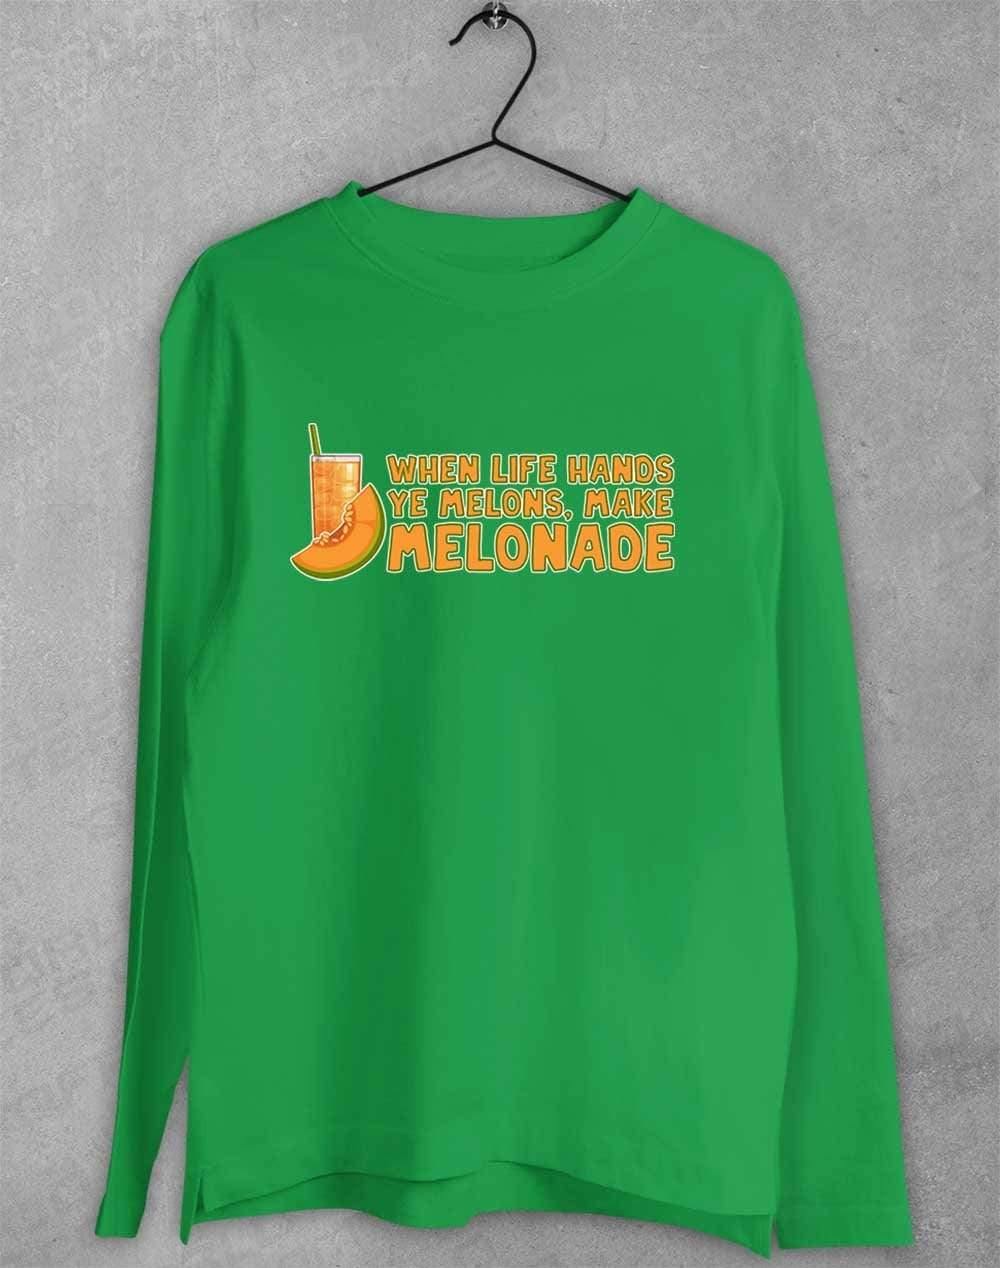 Make Melonade Long Sleeve T-Shirt S / Irish Green  - Off World Tees